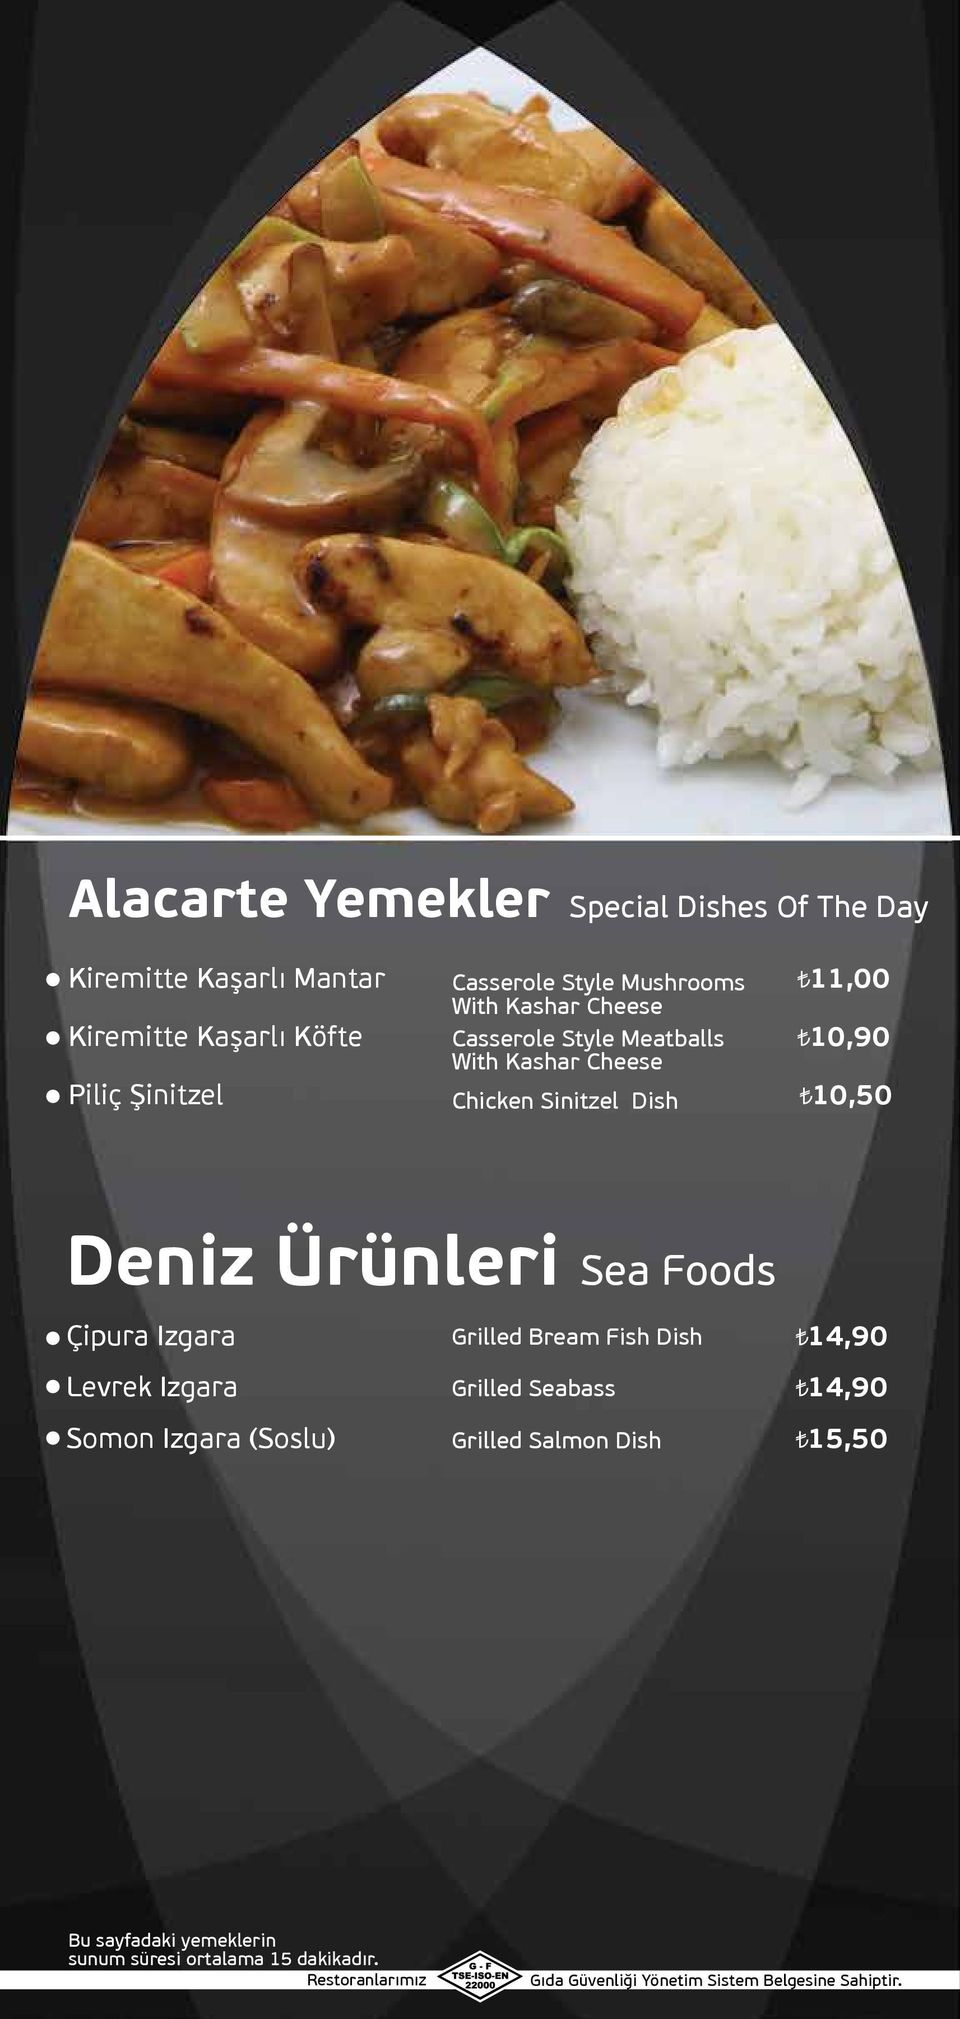 Chicken Sinitzel Dish Deniz Ürünleri Sea Foods Çipura Izgara Grilled Bream Fish Dish 14,90 Levrek Izgara